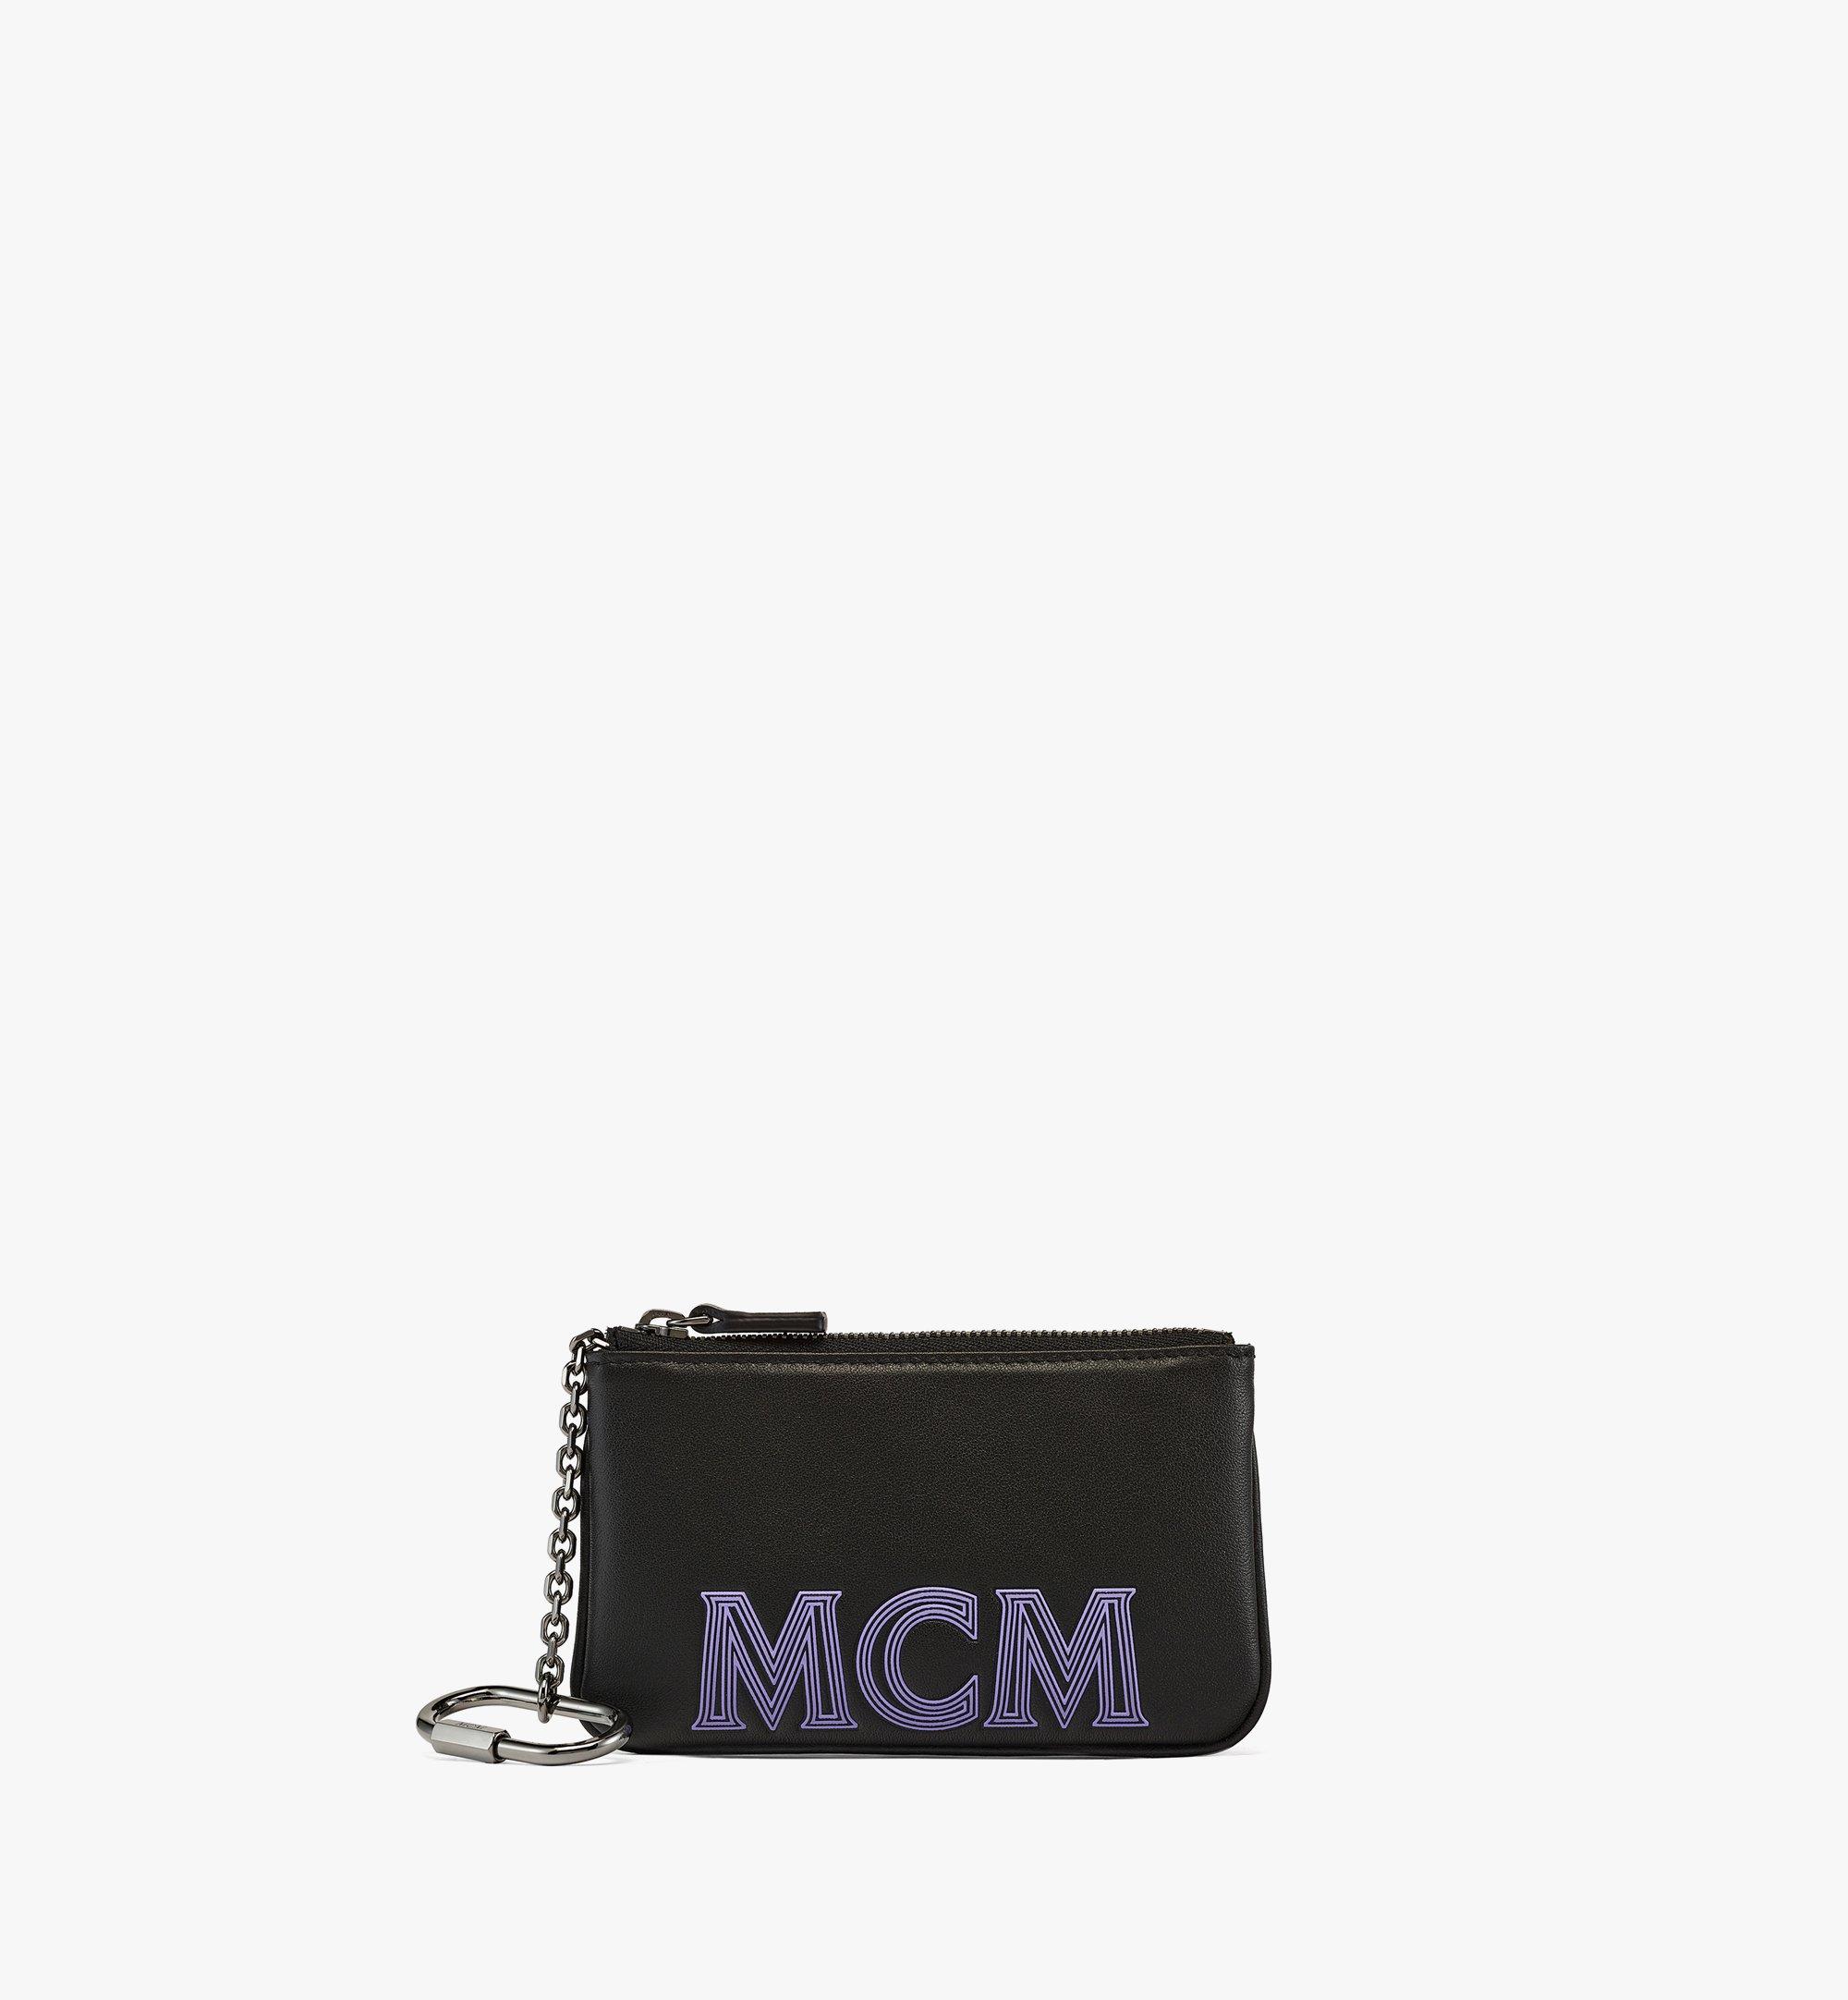 MCM Key Pouch in MCM Leather Black MXKCSSX02BK001 Alternate View 1